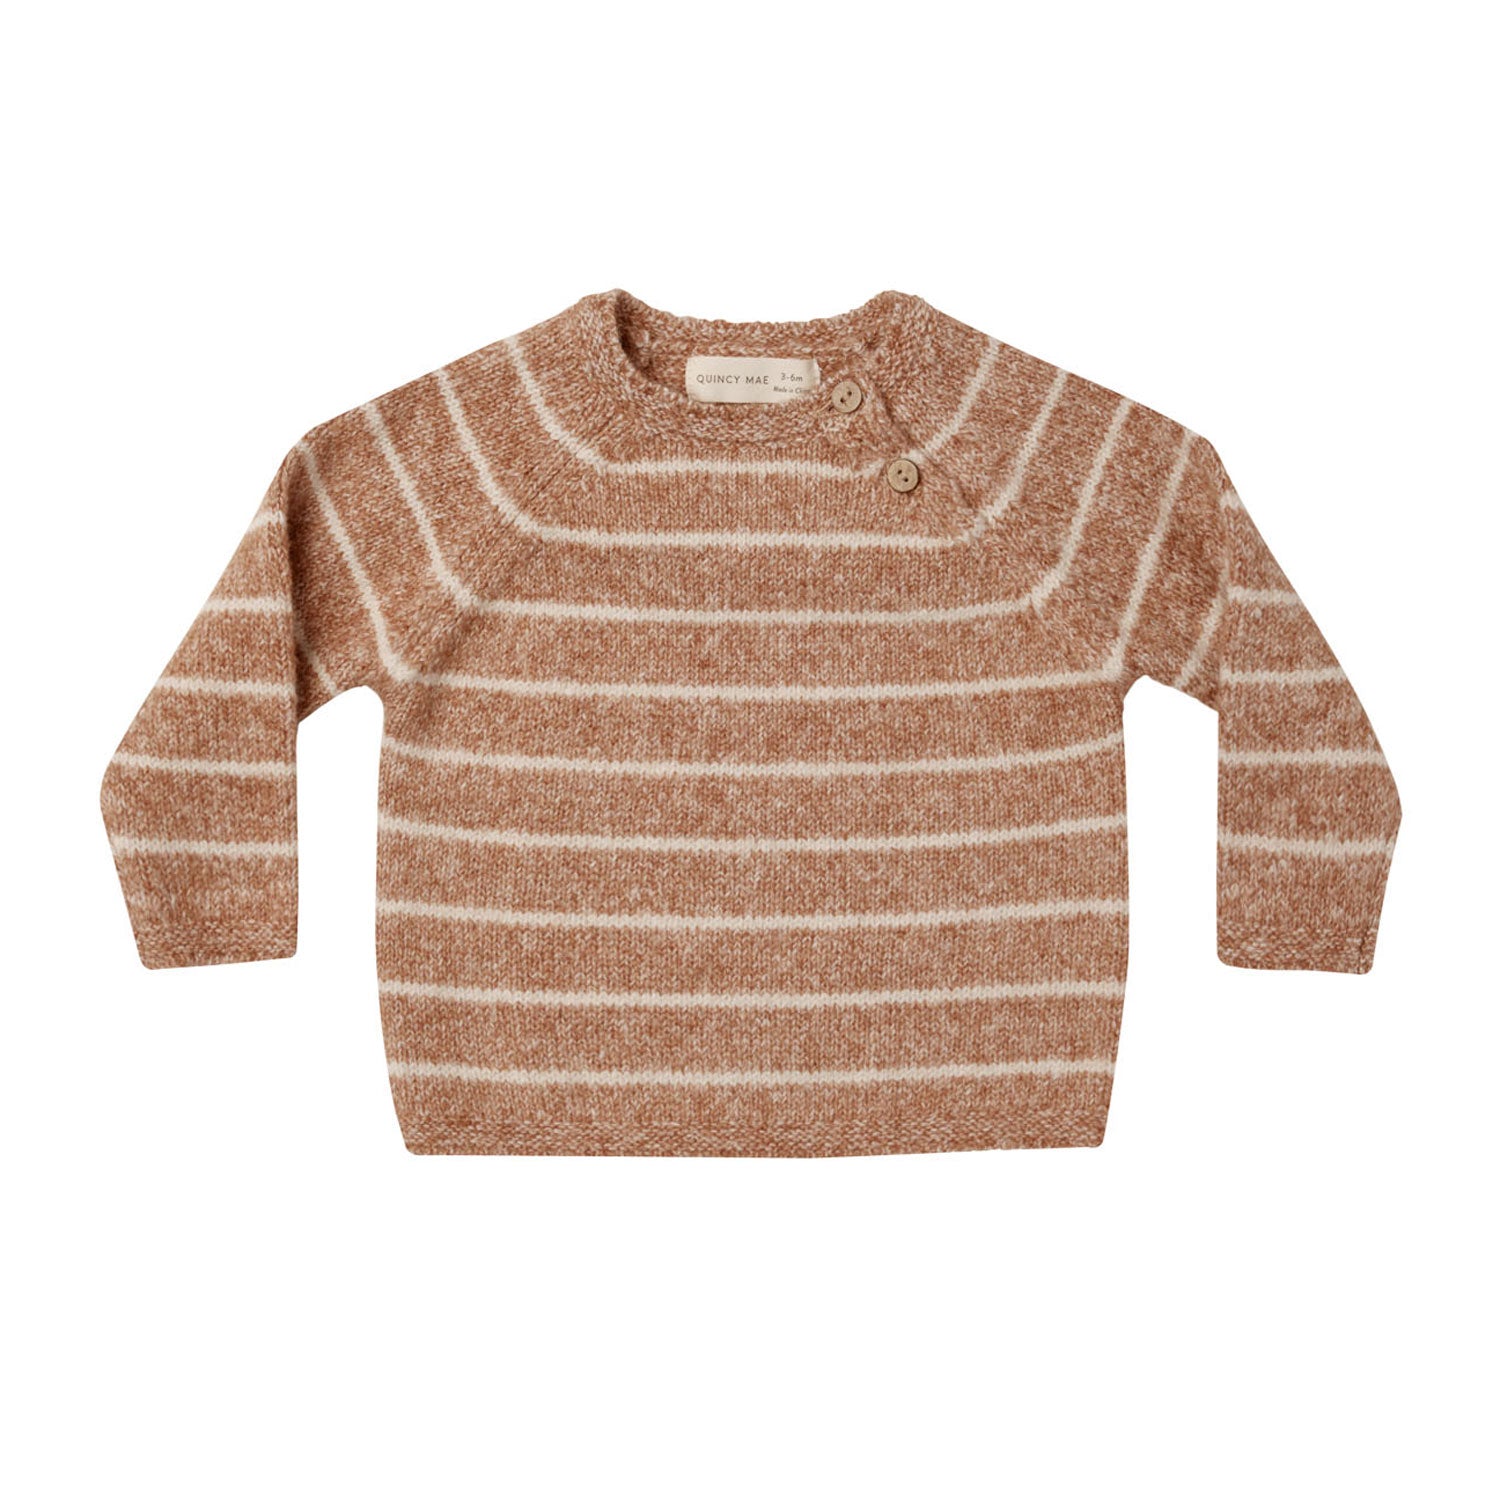 Quincy Mae Ace Knit Sweater - Cinnamon Stripe - Heathered